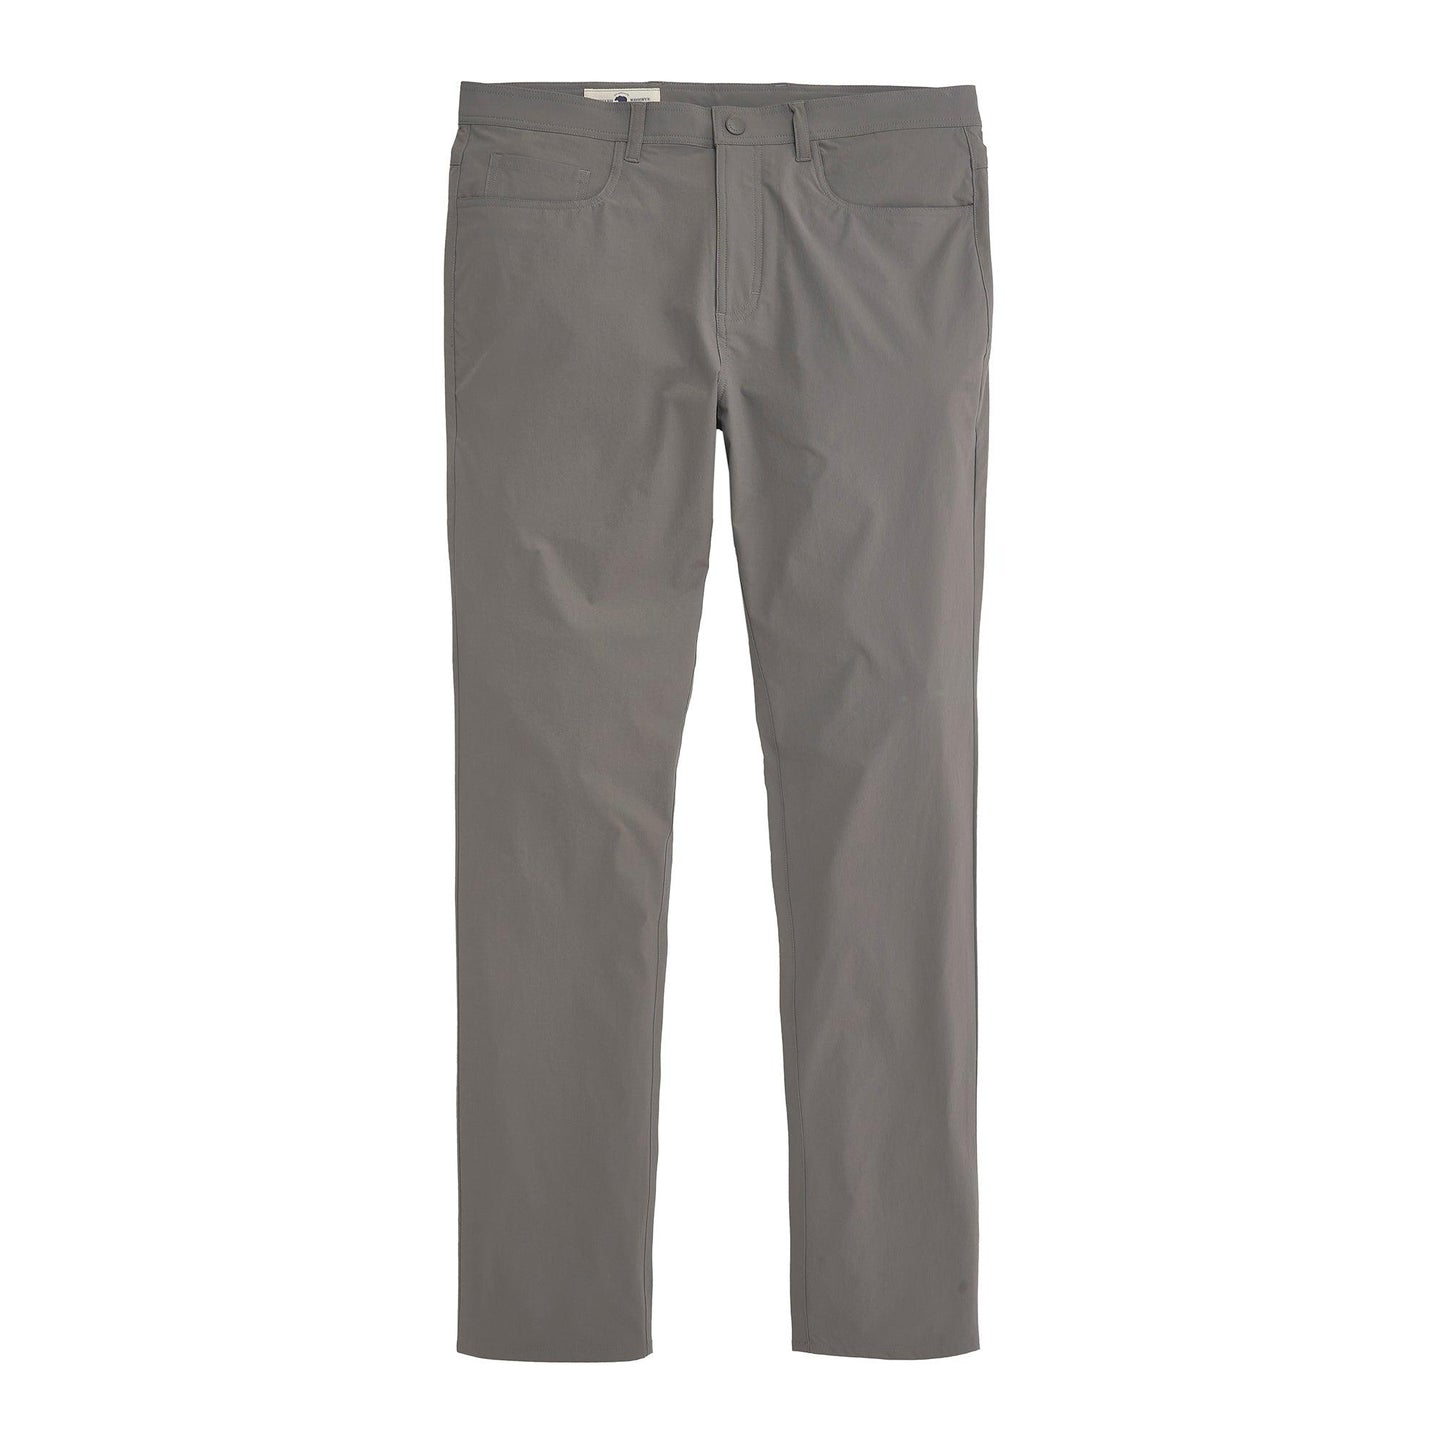 Crenshaw Performance Five Pocket Pants - Steel Grey - Onward Reserve